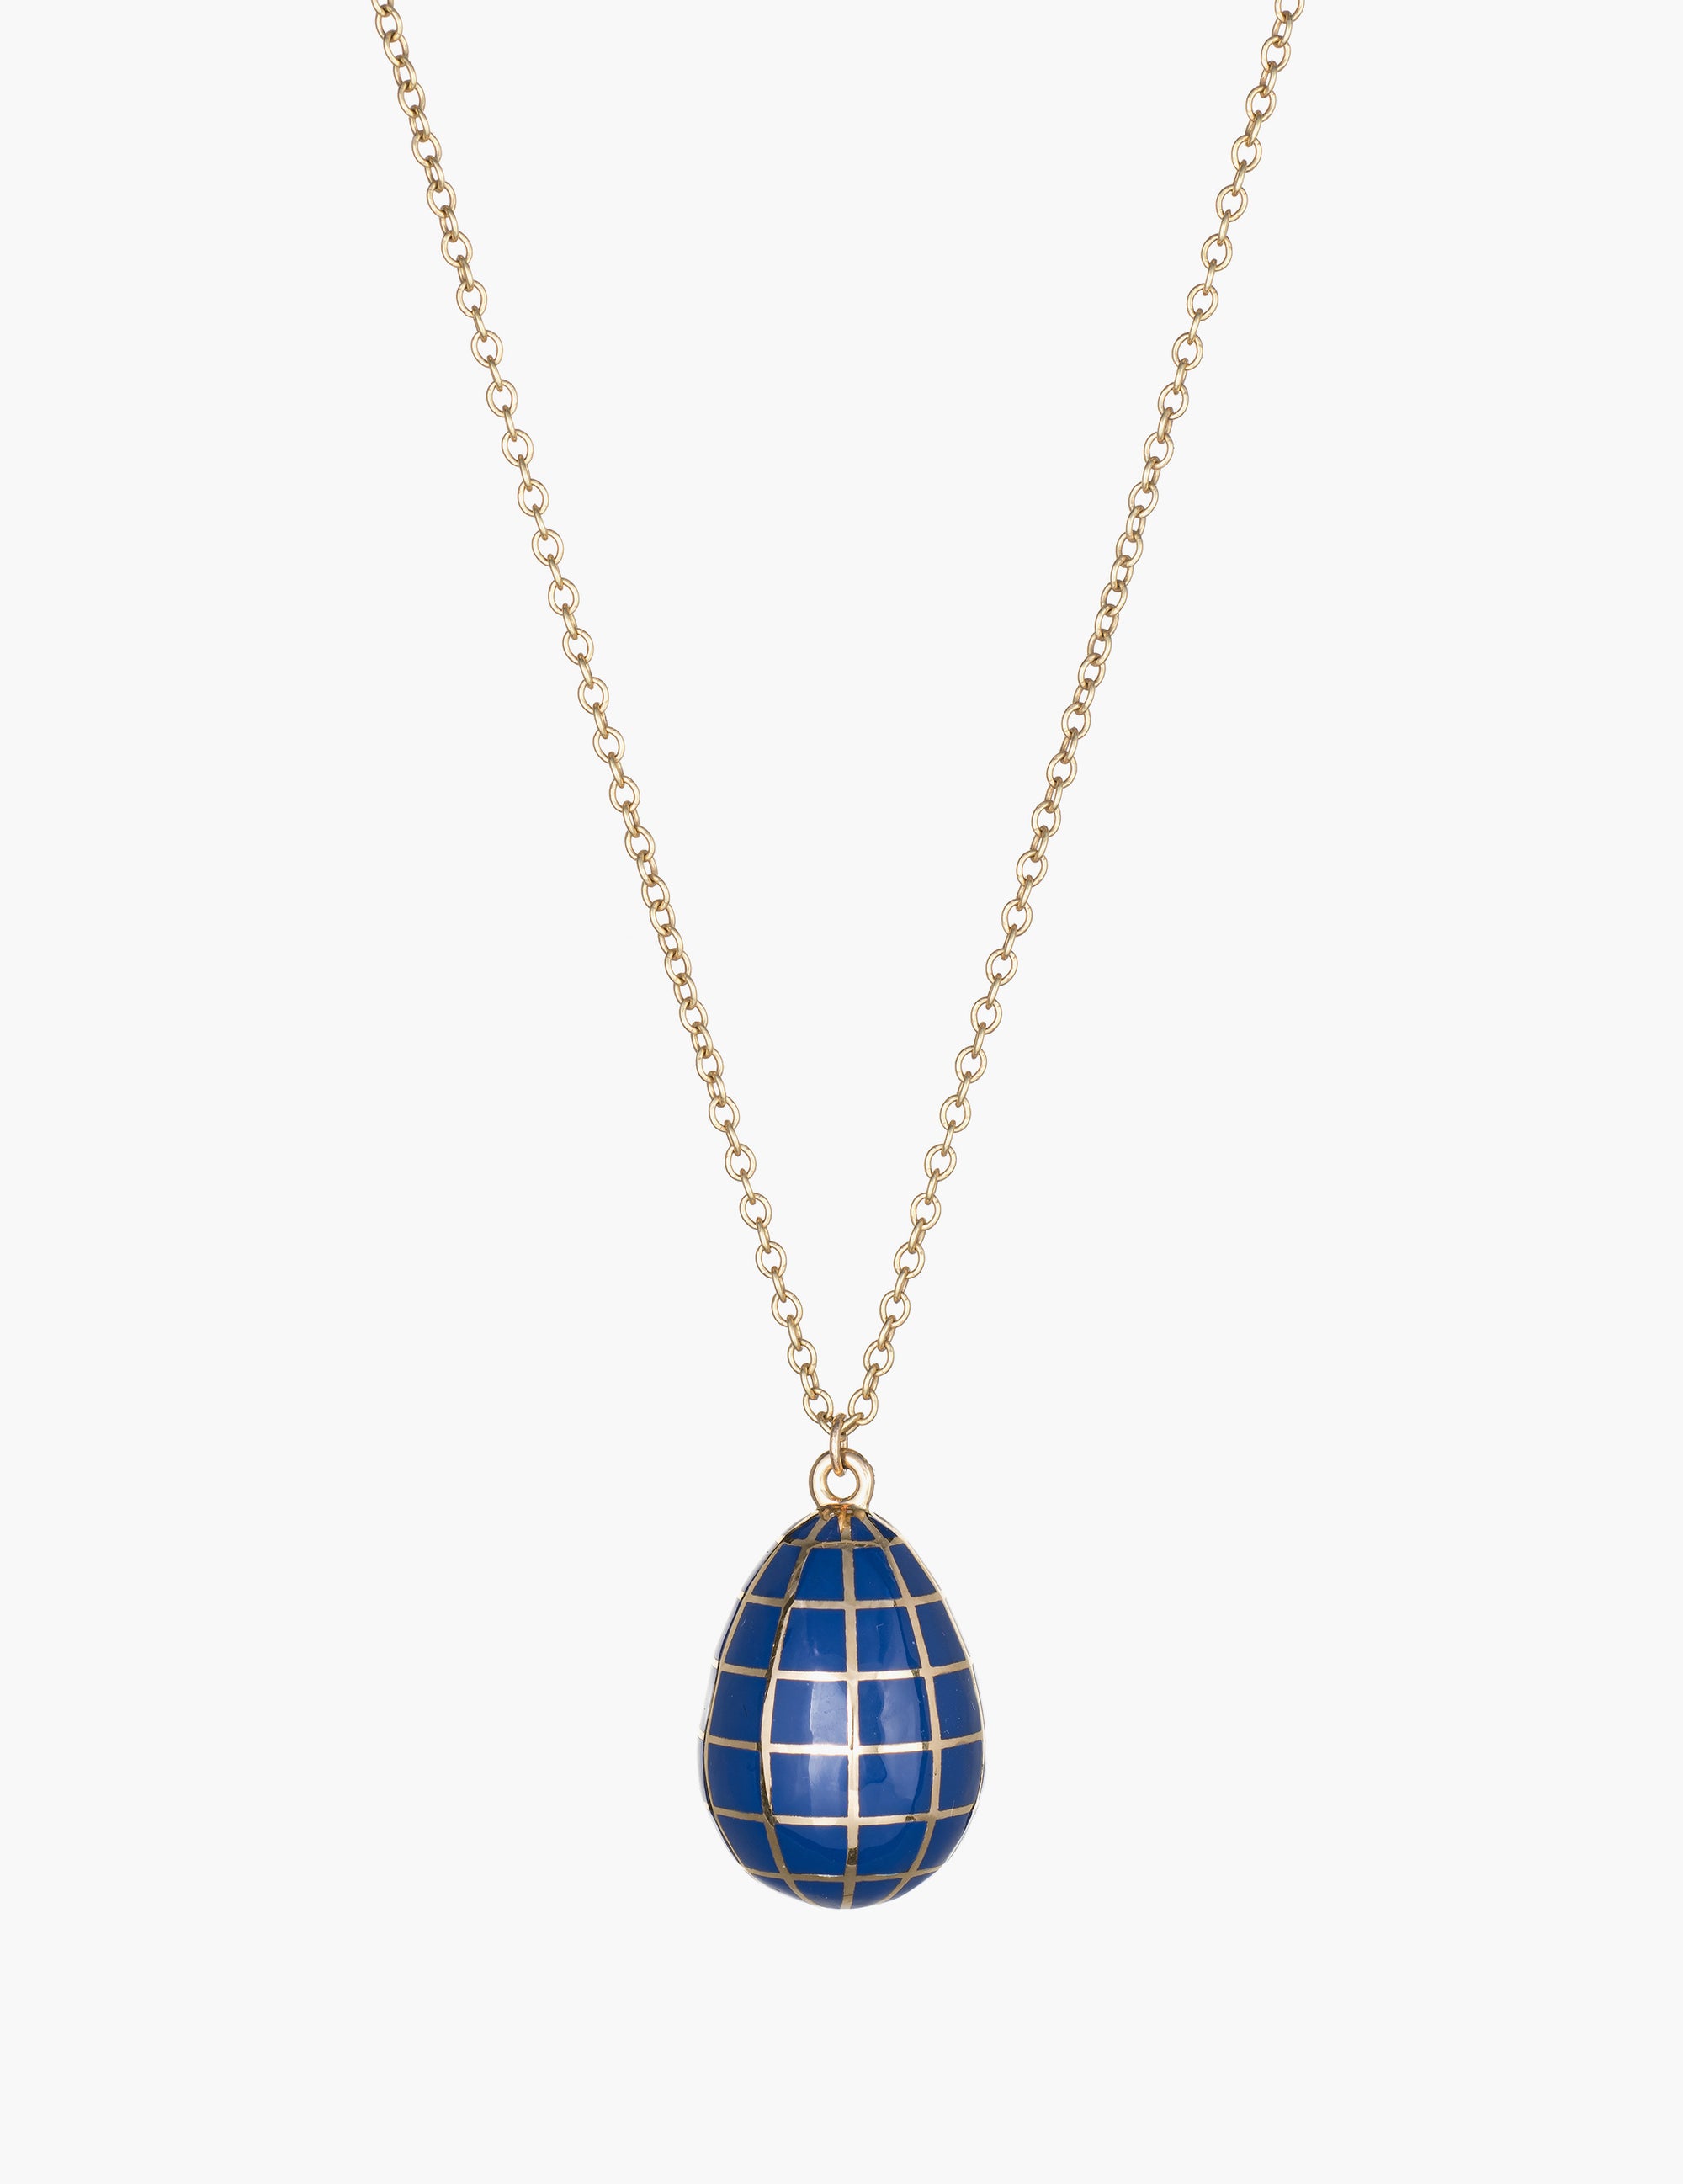 Blue enamel egg pendant